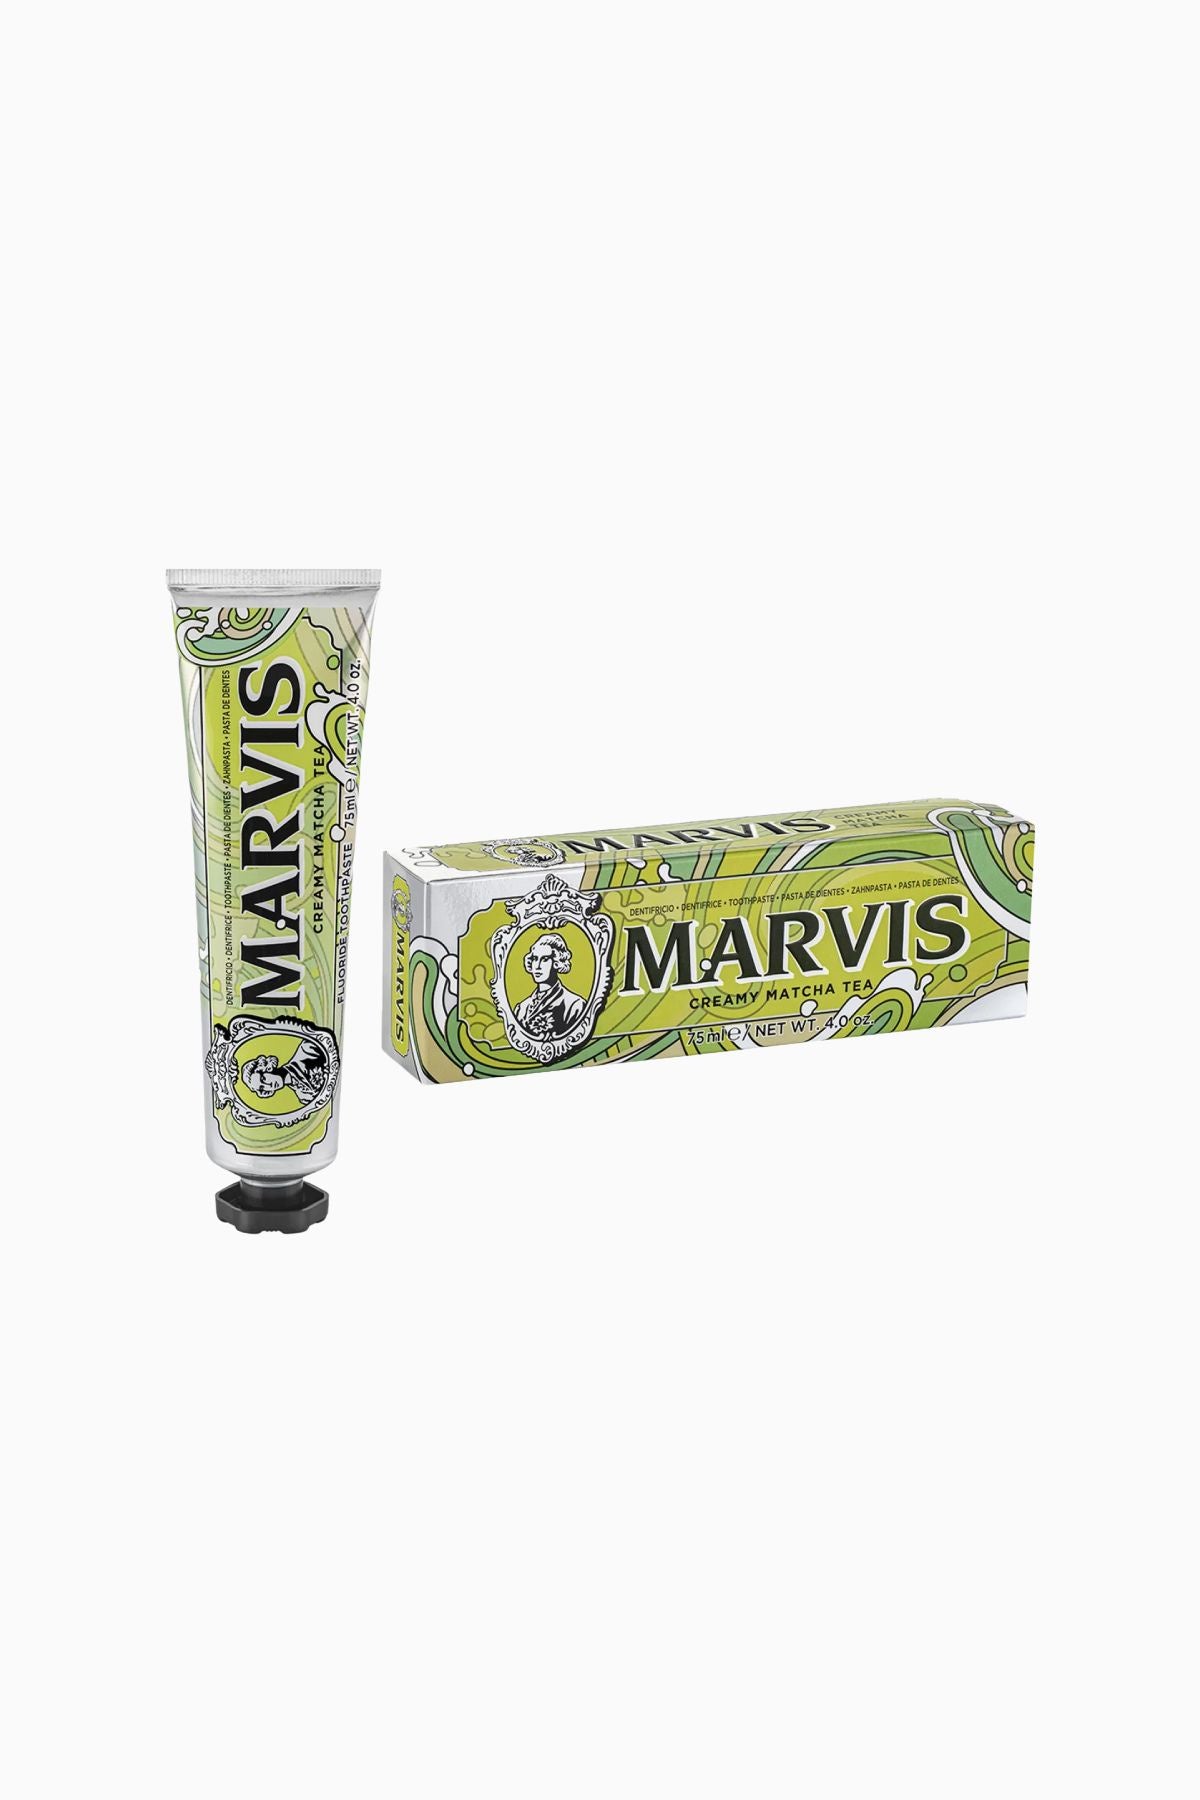 Marvis Toothpaste - Creamy Matcha Tea